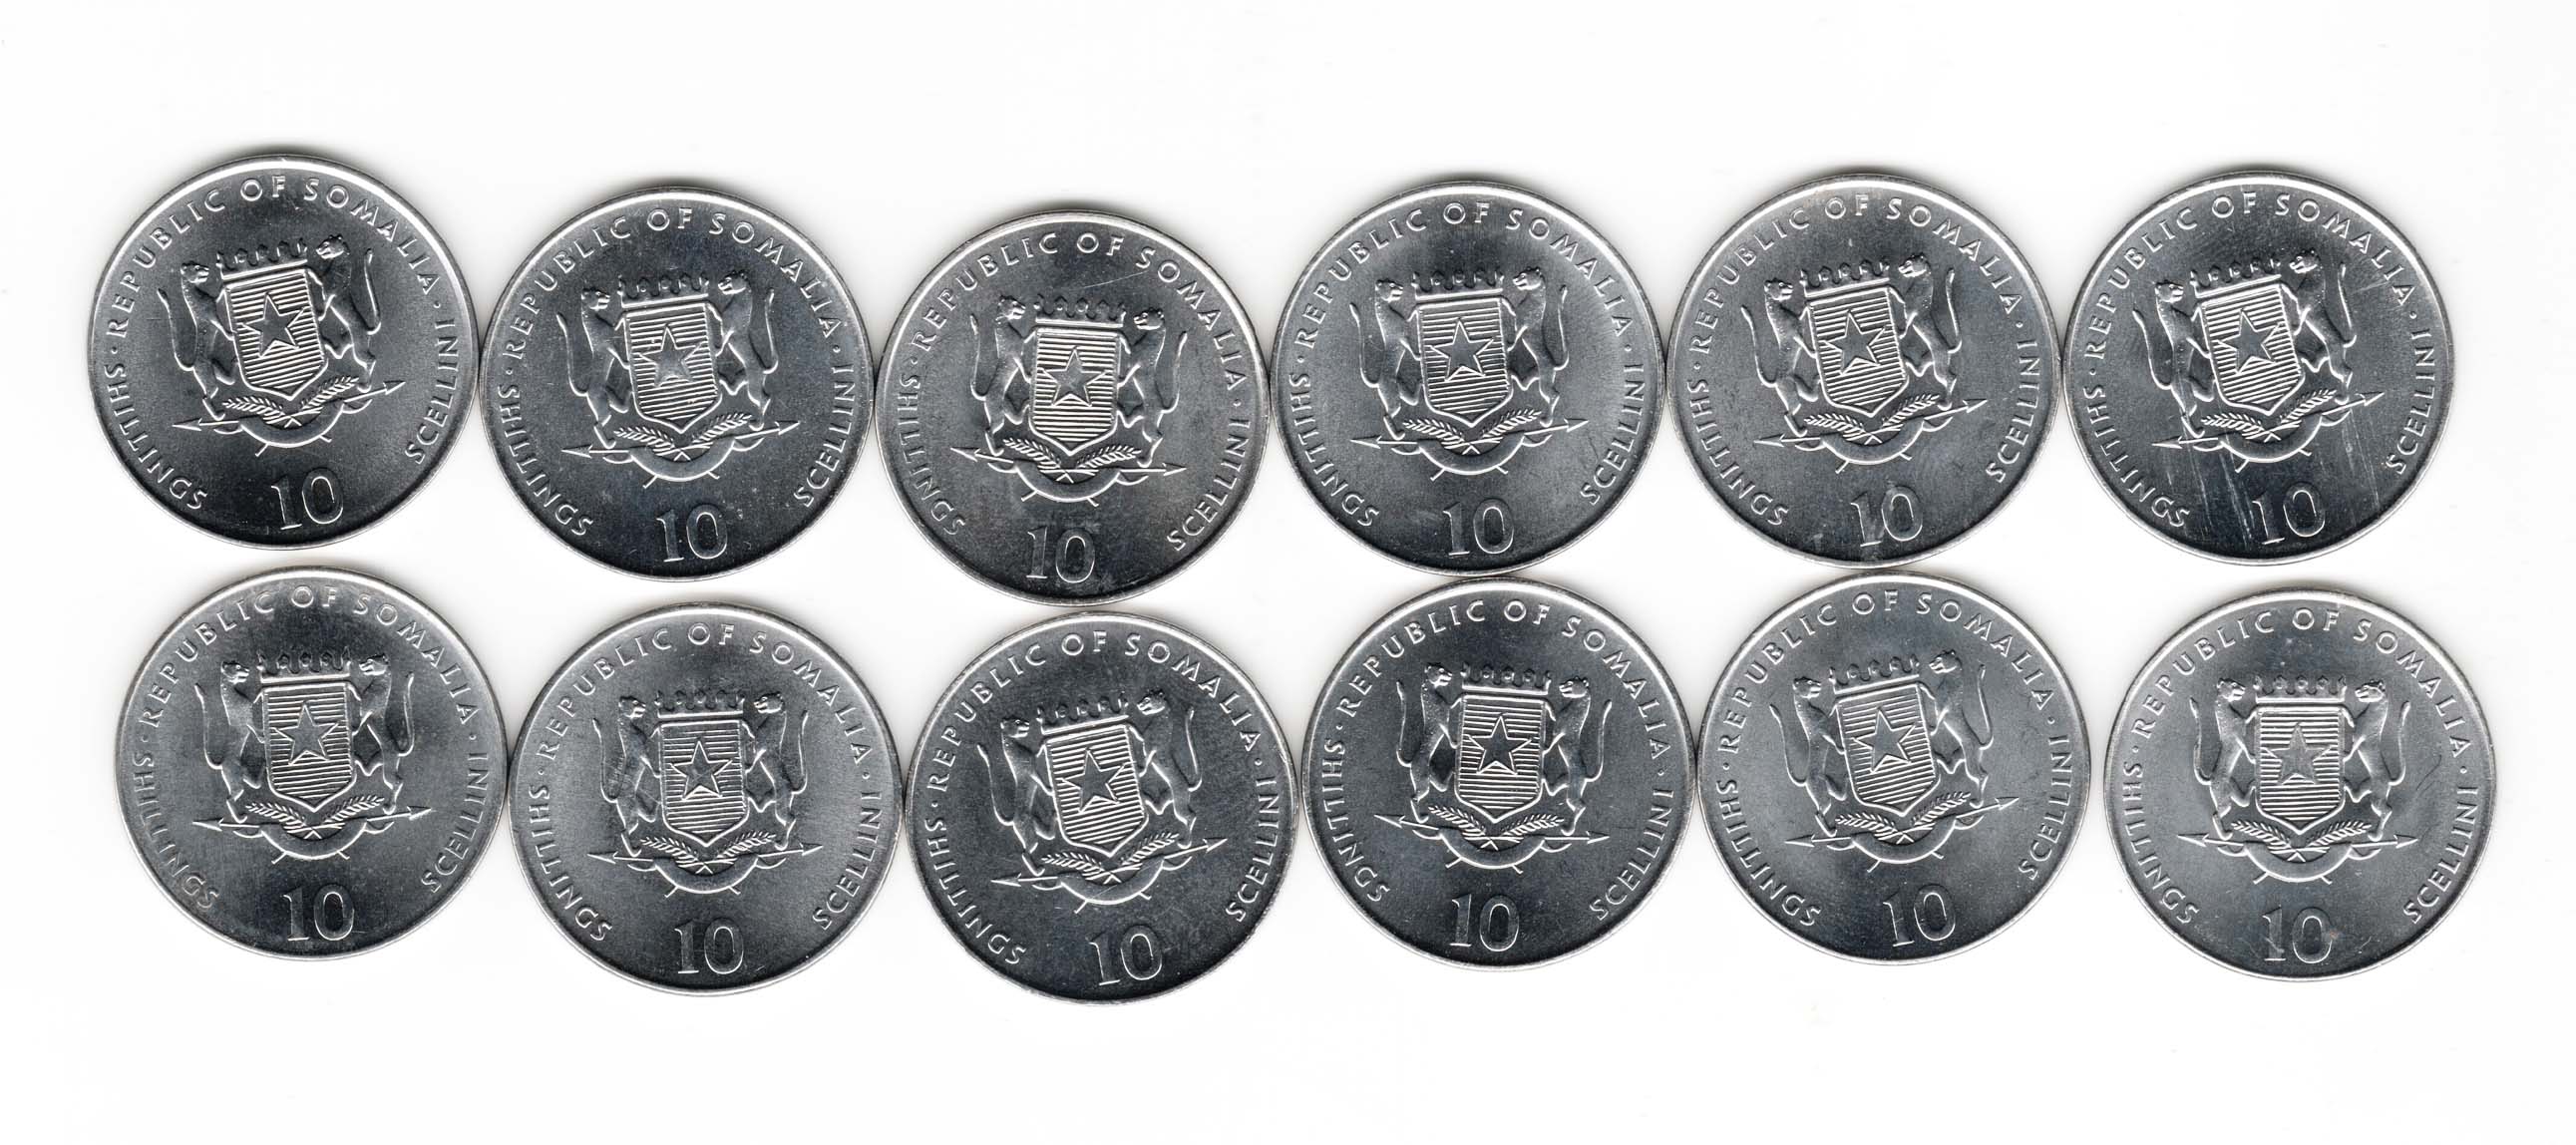 Somalia 10 shillings Variety Of 12 Coins